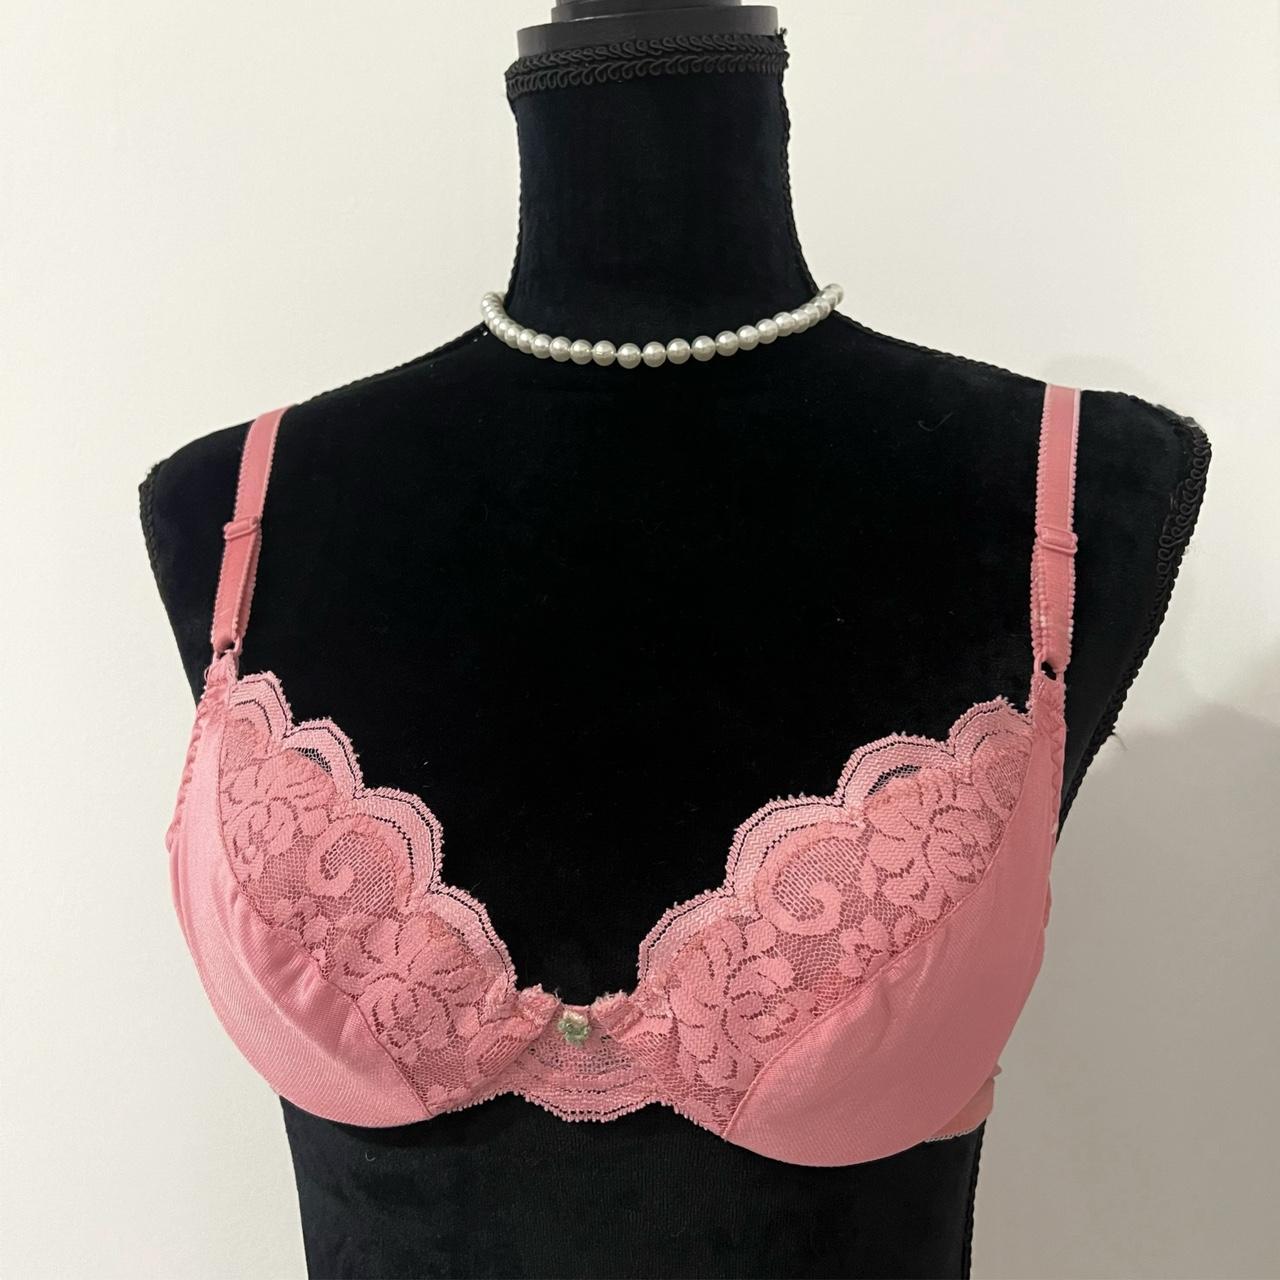 Vintage pink chantilly lace bra🌸, So stunning!!